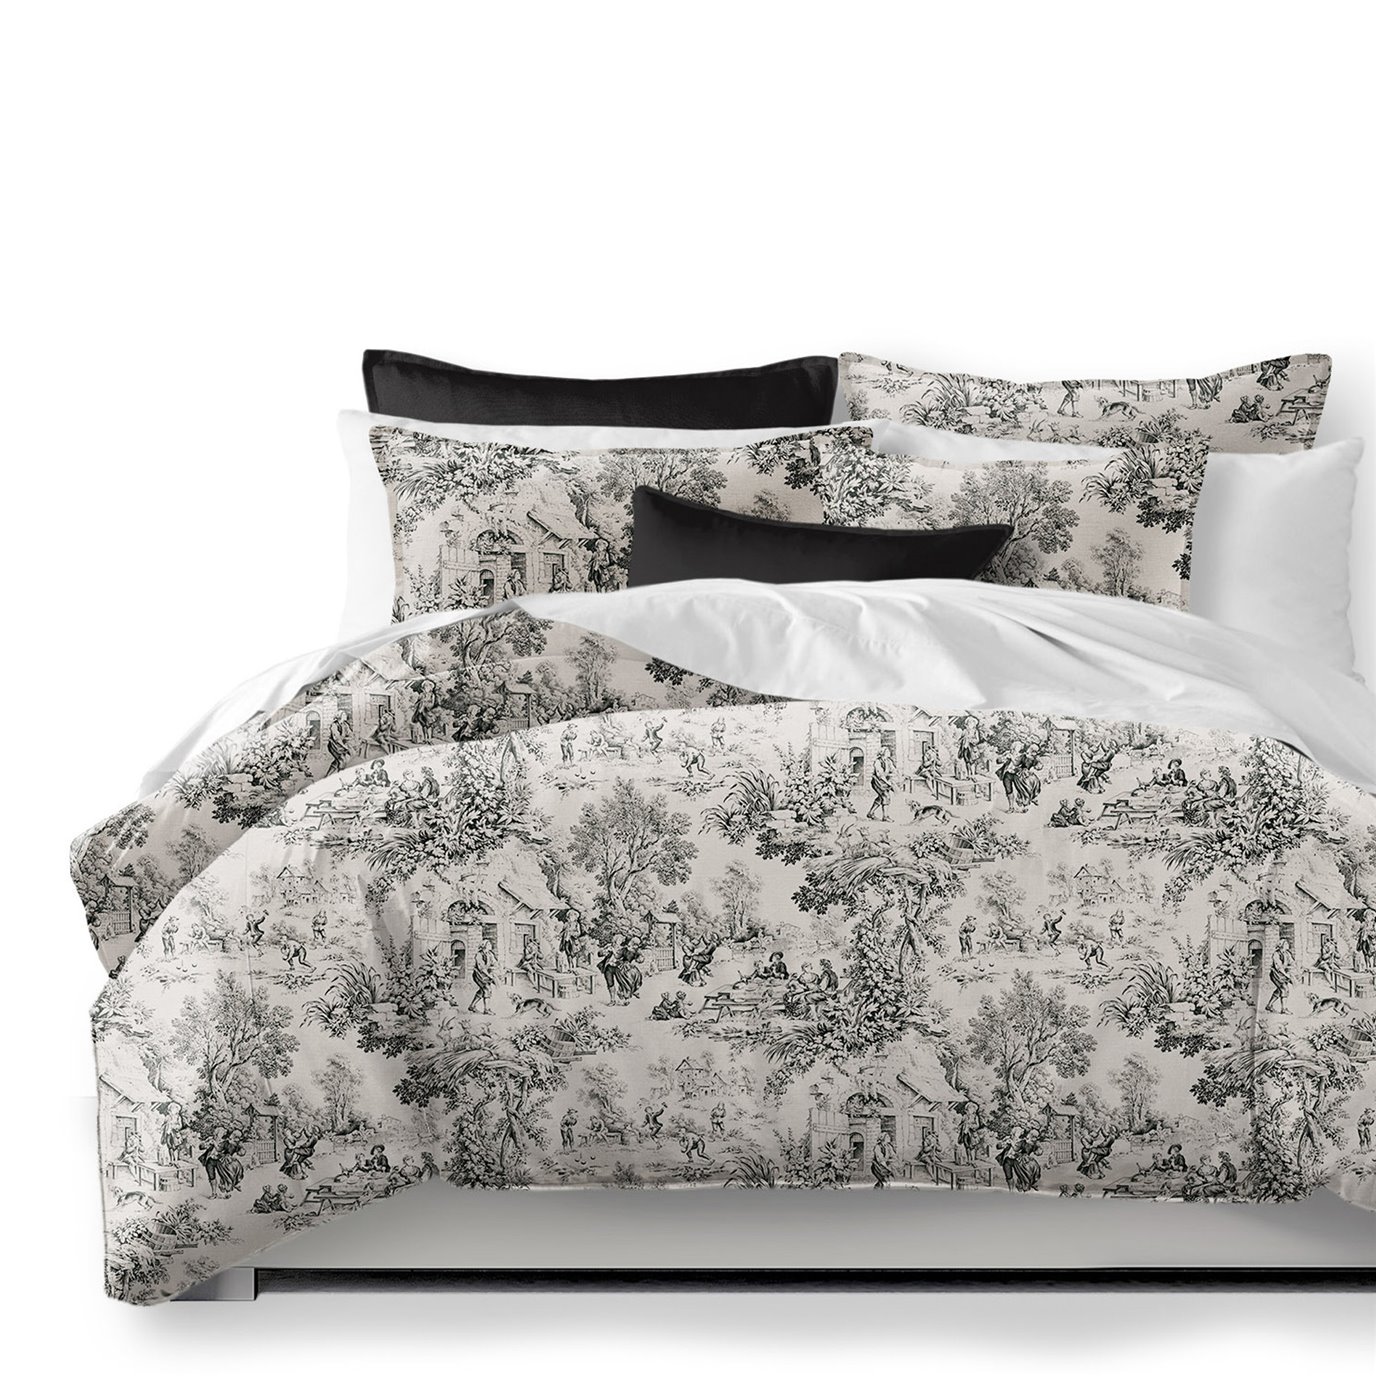 Maison Toile Black Comforter and Pillow Sham(s) Set - Size Twin